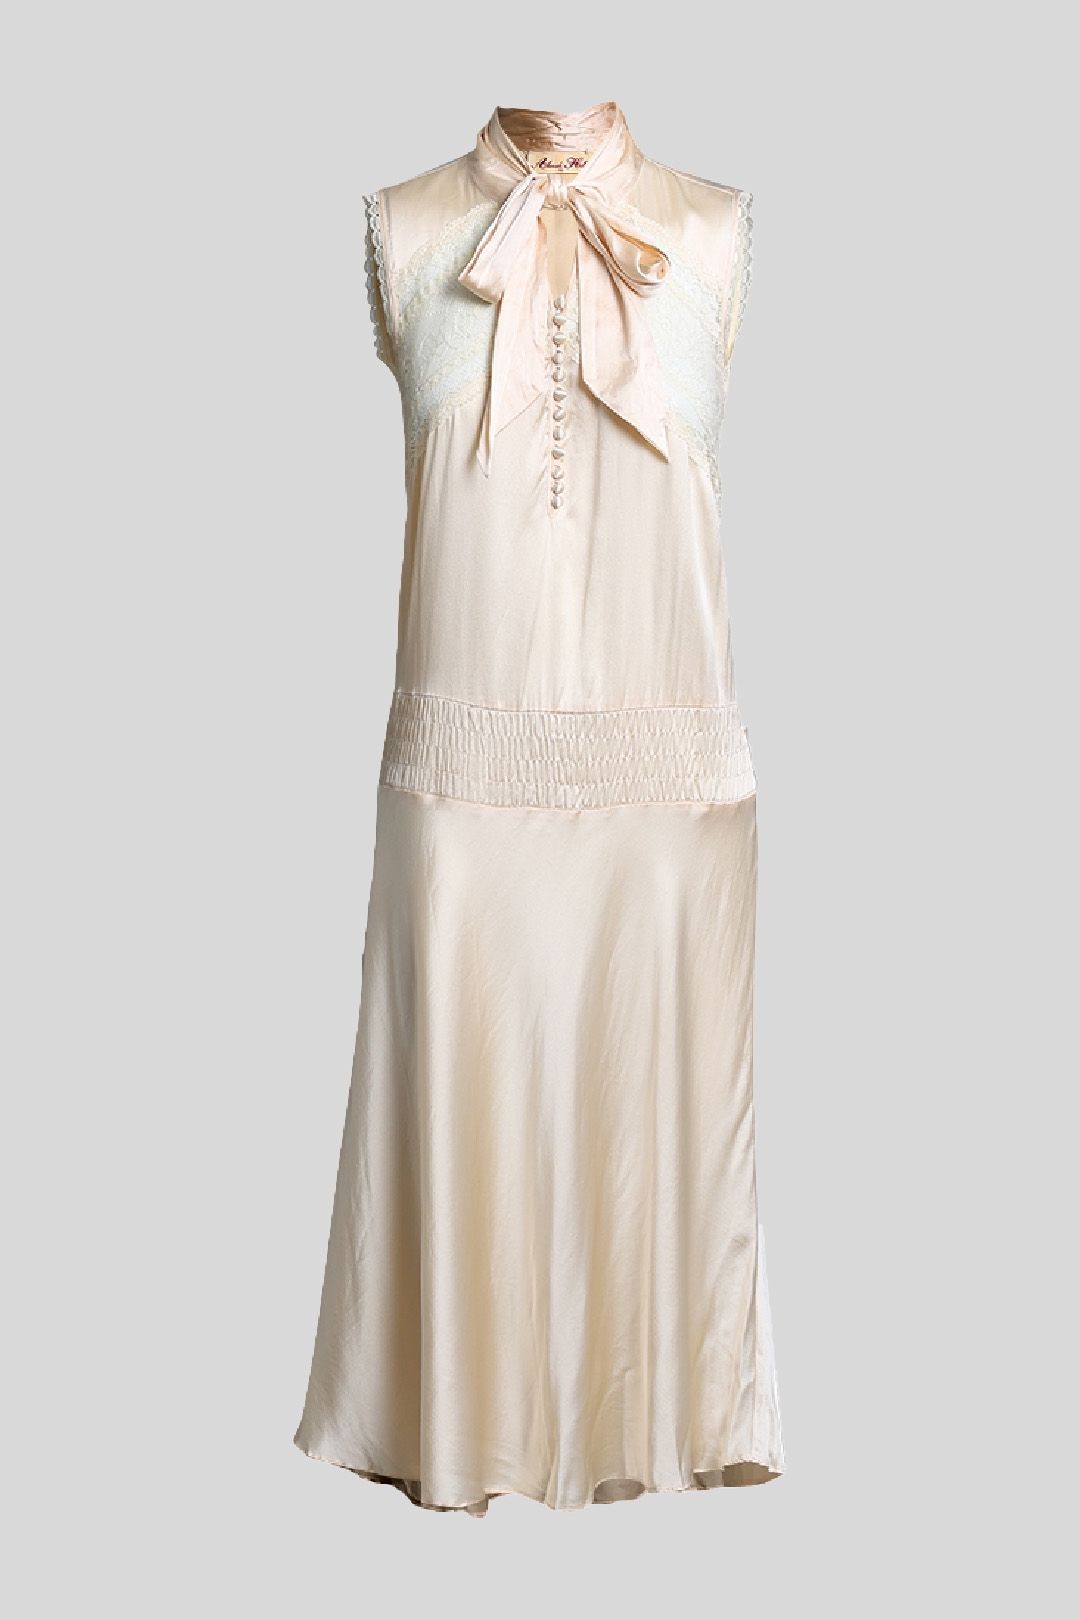 Alannah Hill - Satin and Lace Dress - Cream